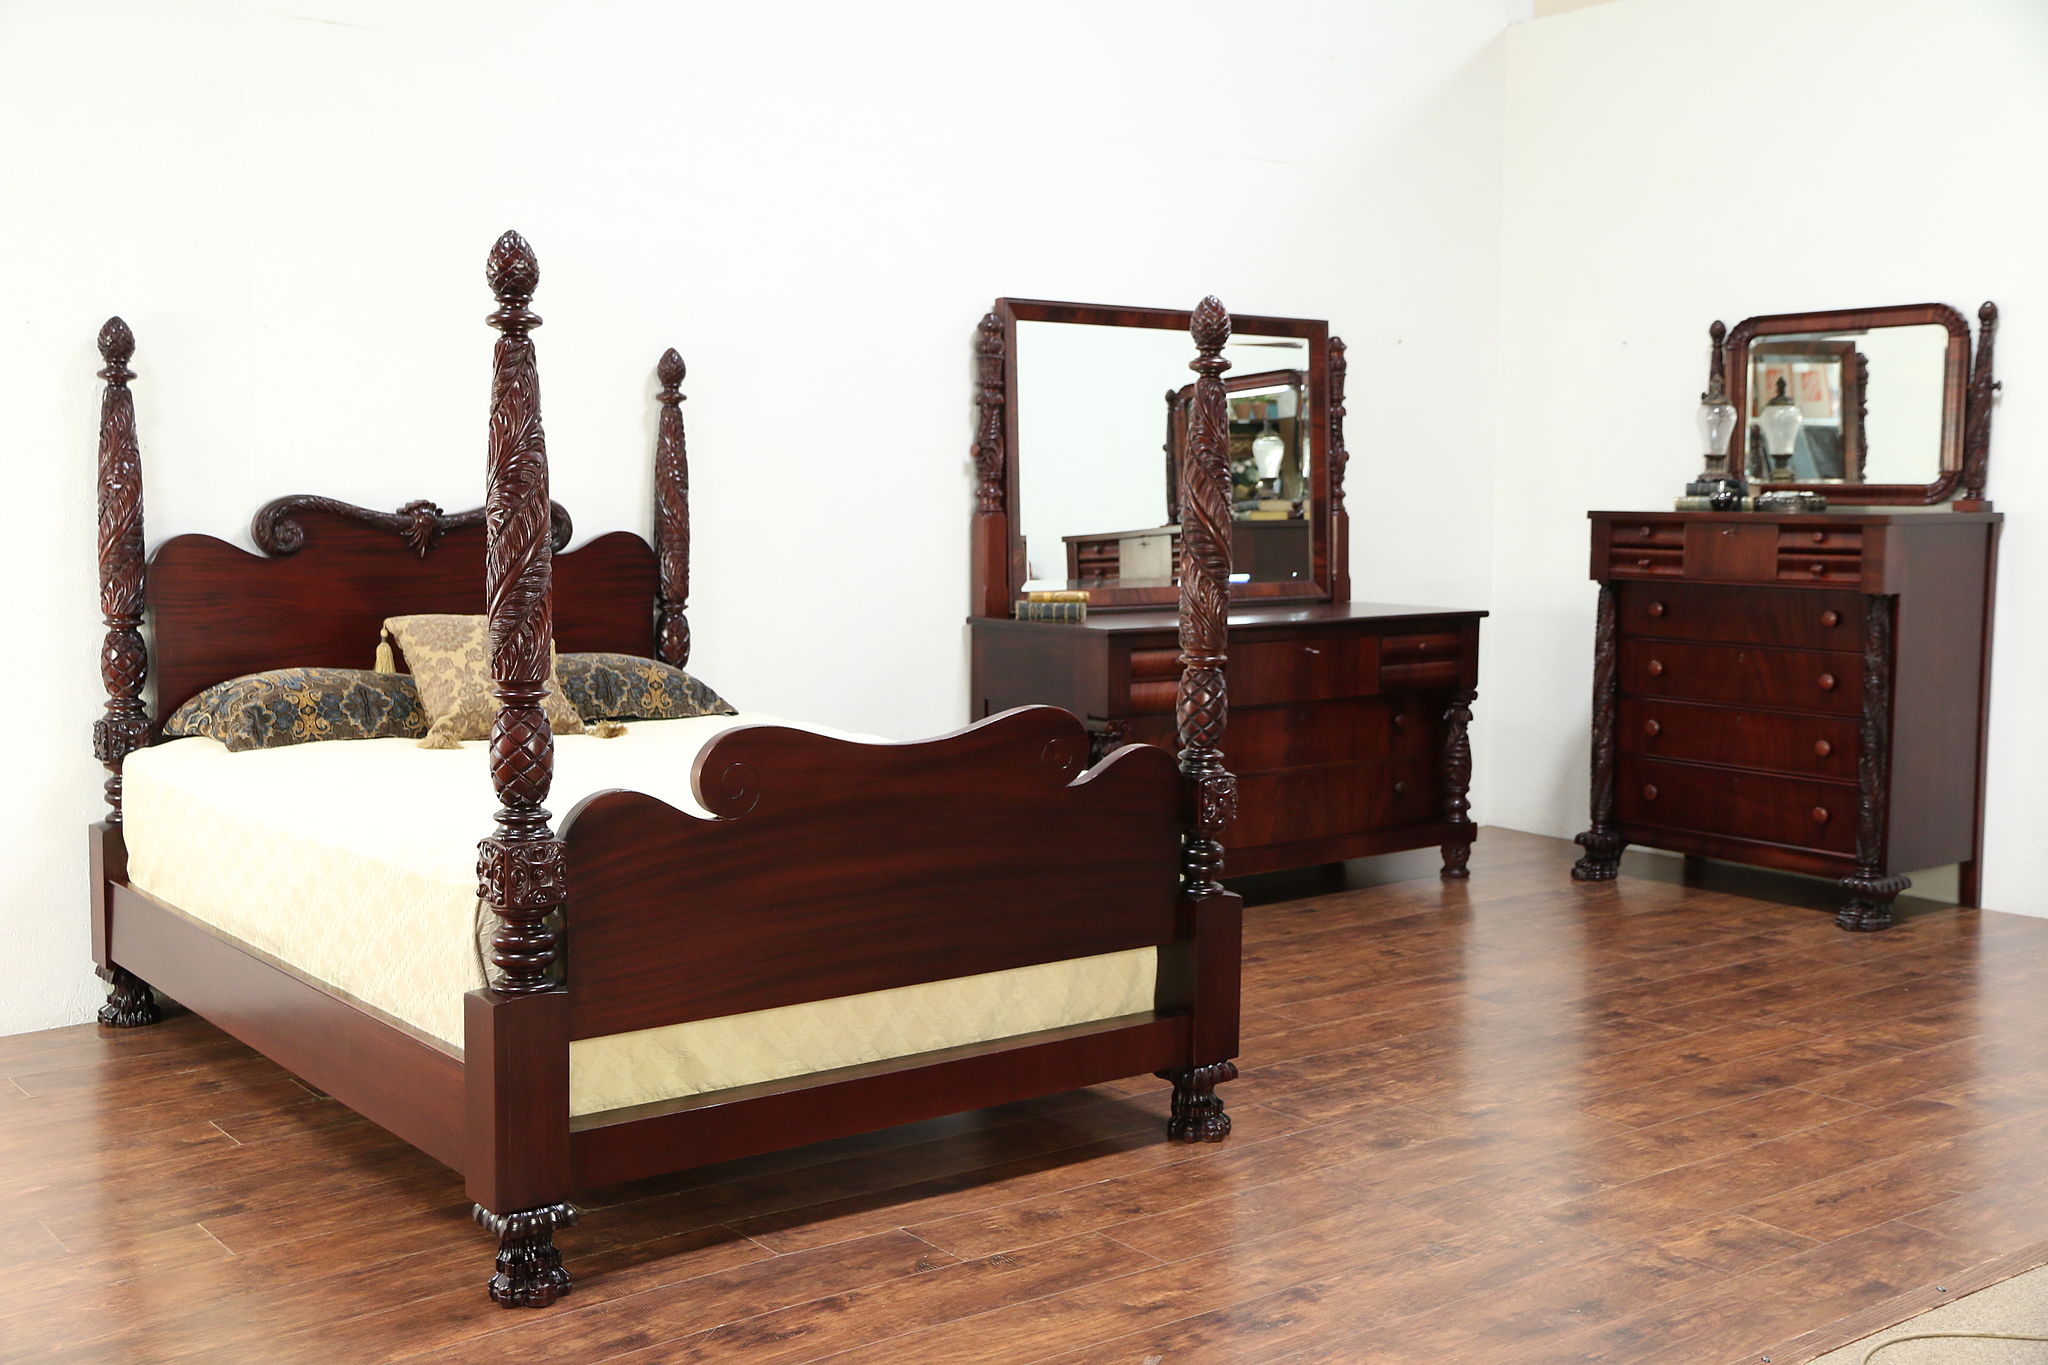 carved mahogany bedroom furniture